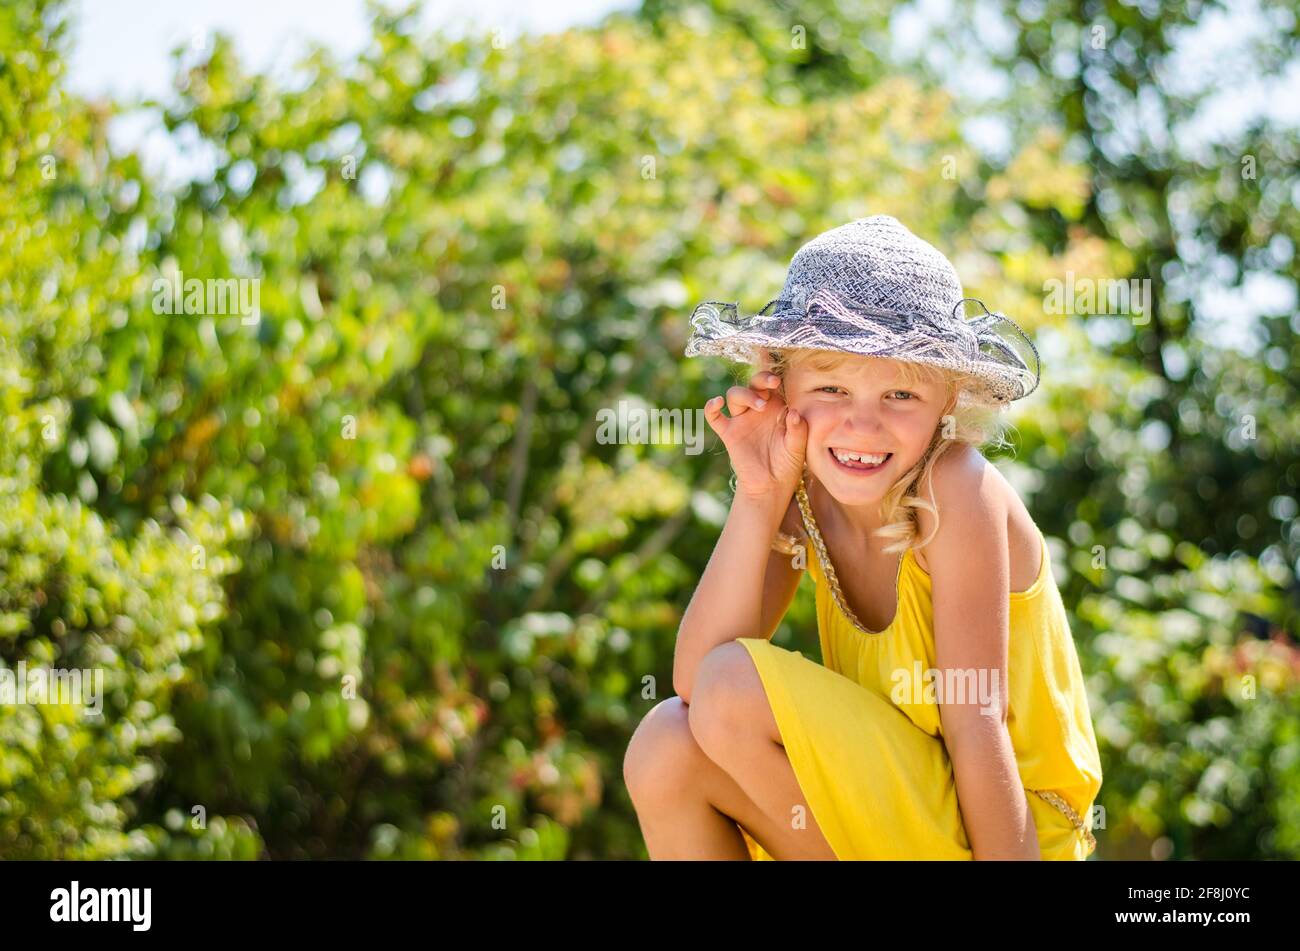 petite fille blonde en robe jaune assise Banque D'Images